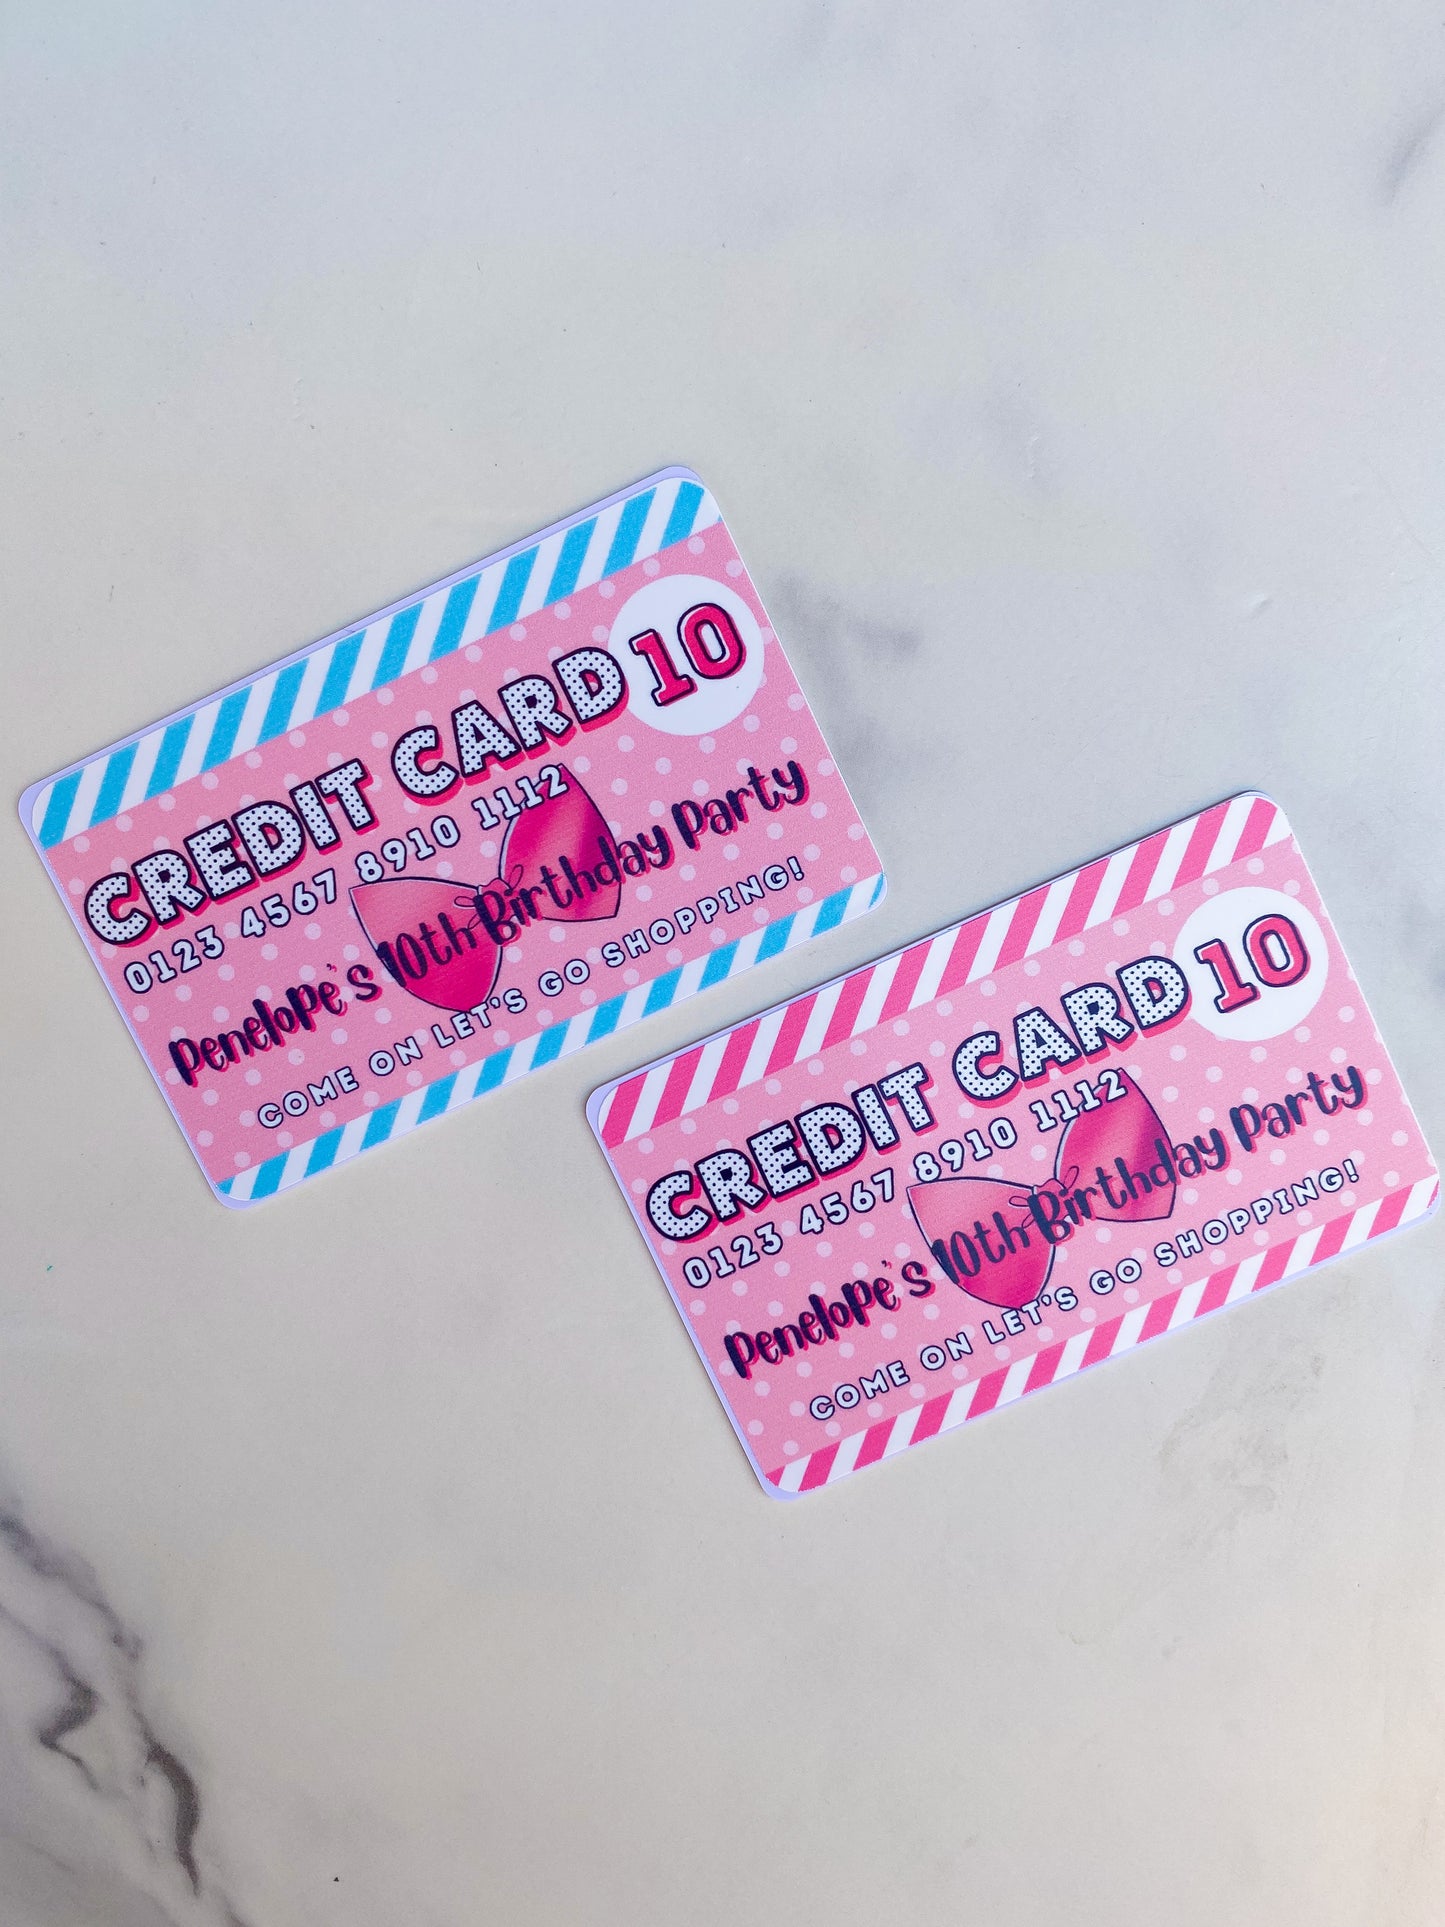 Party Favors: Polka Dot Glam Dolls Custom Pretend Birthday Credit Card